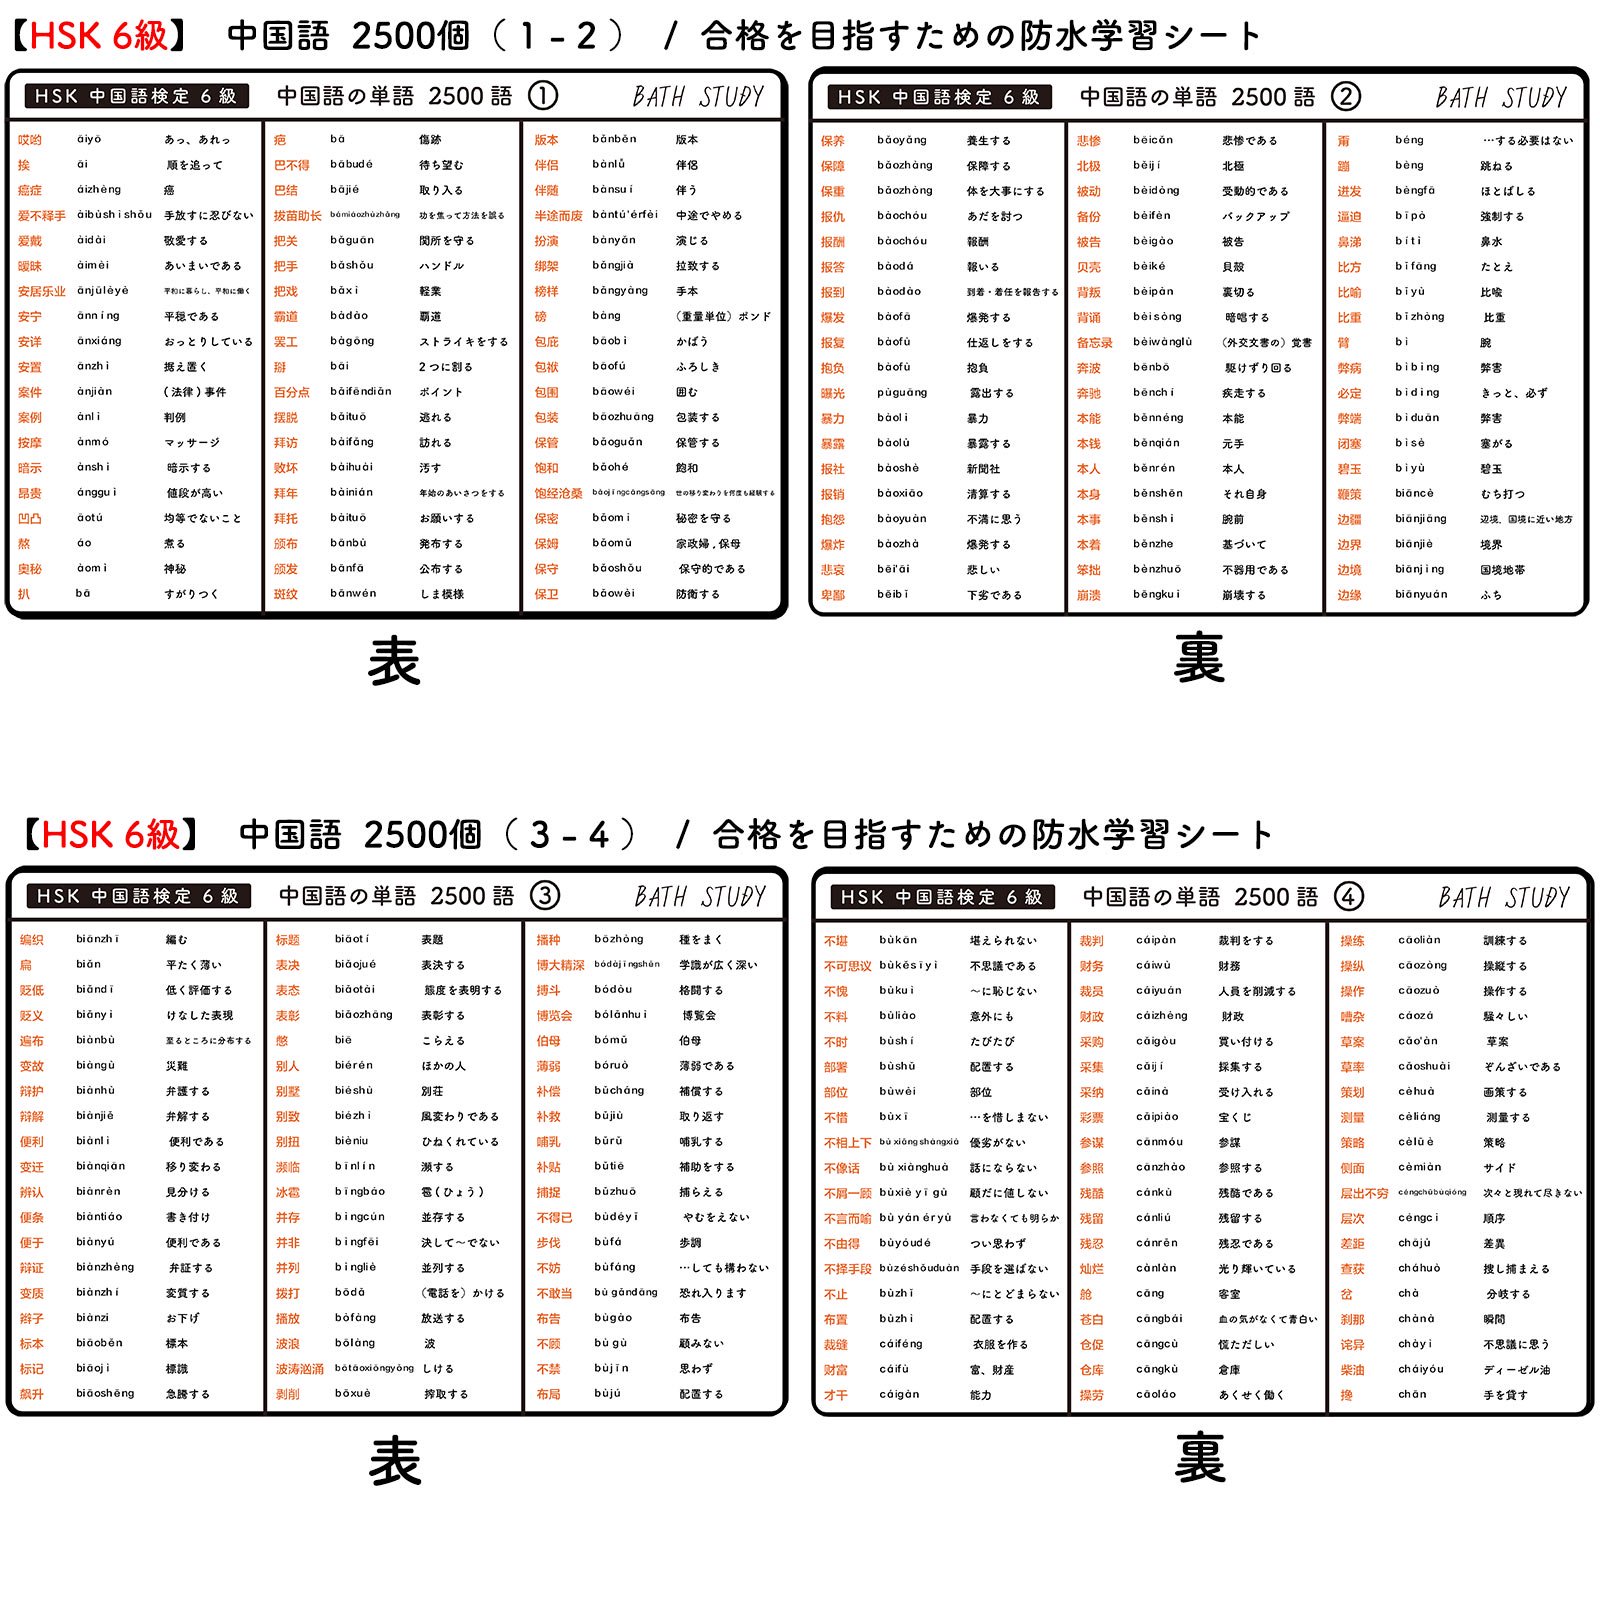 HSK 6級の合格を目指す勉強シート。中国語、単語2500語を収録。お風呂で効率的に勉強をしよう